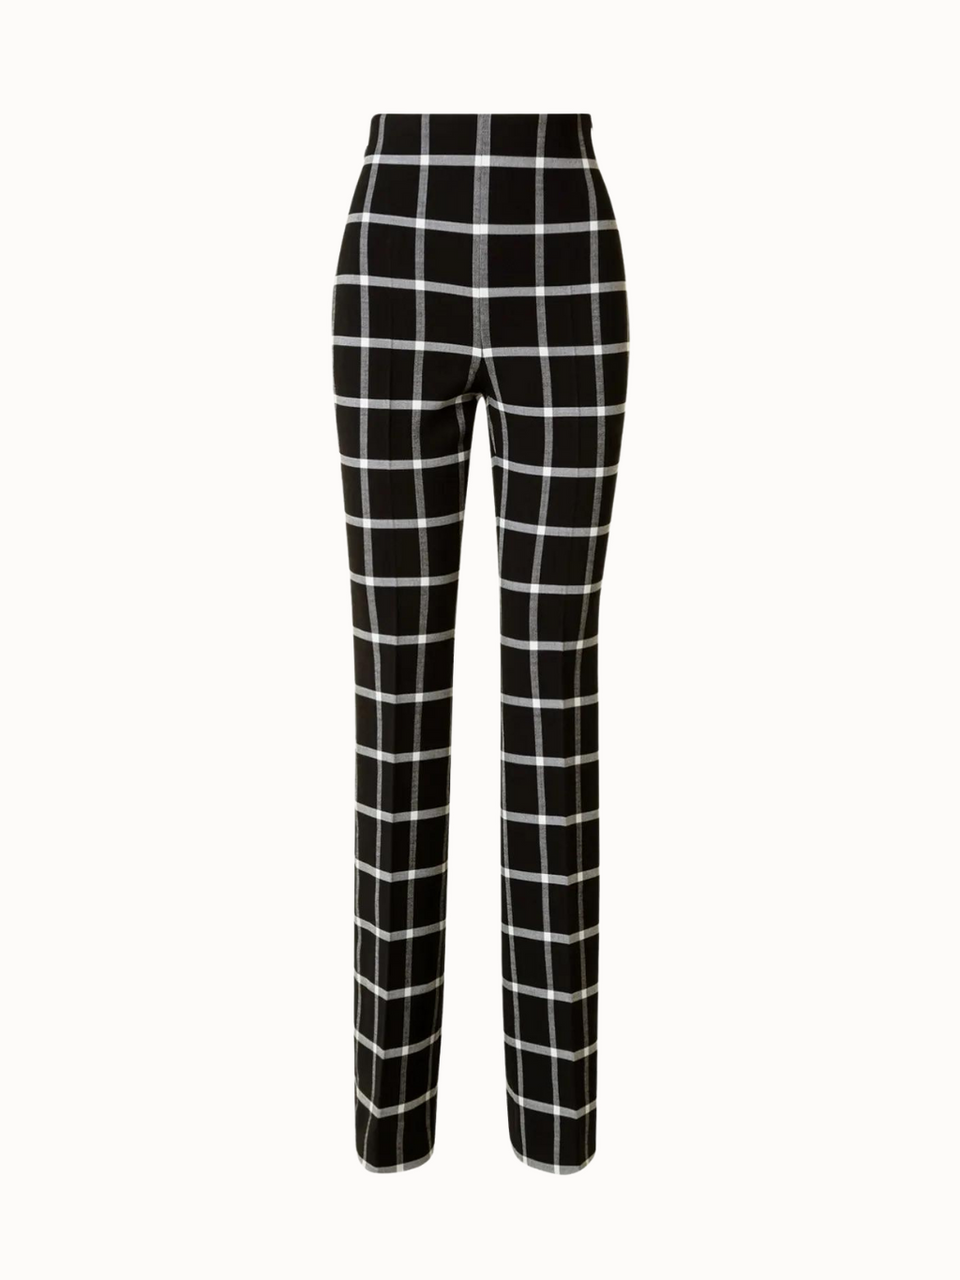 WDIRARA Women's Plaid Zip Front Skinny Pants Stretchy Work Gingham Leggings  Black and White XS at Amazon Women's Clothing store